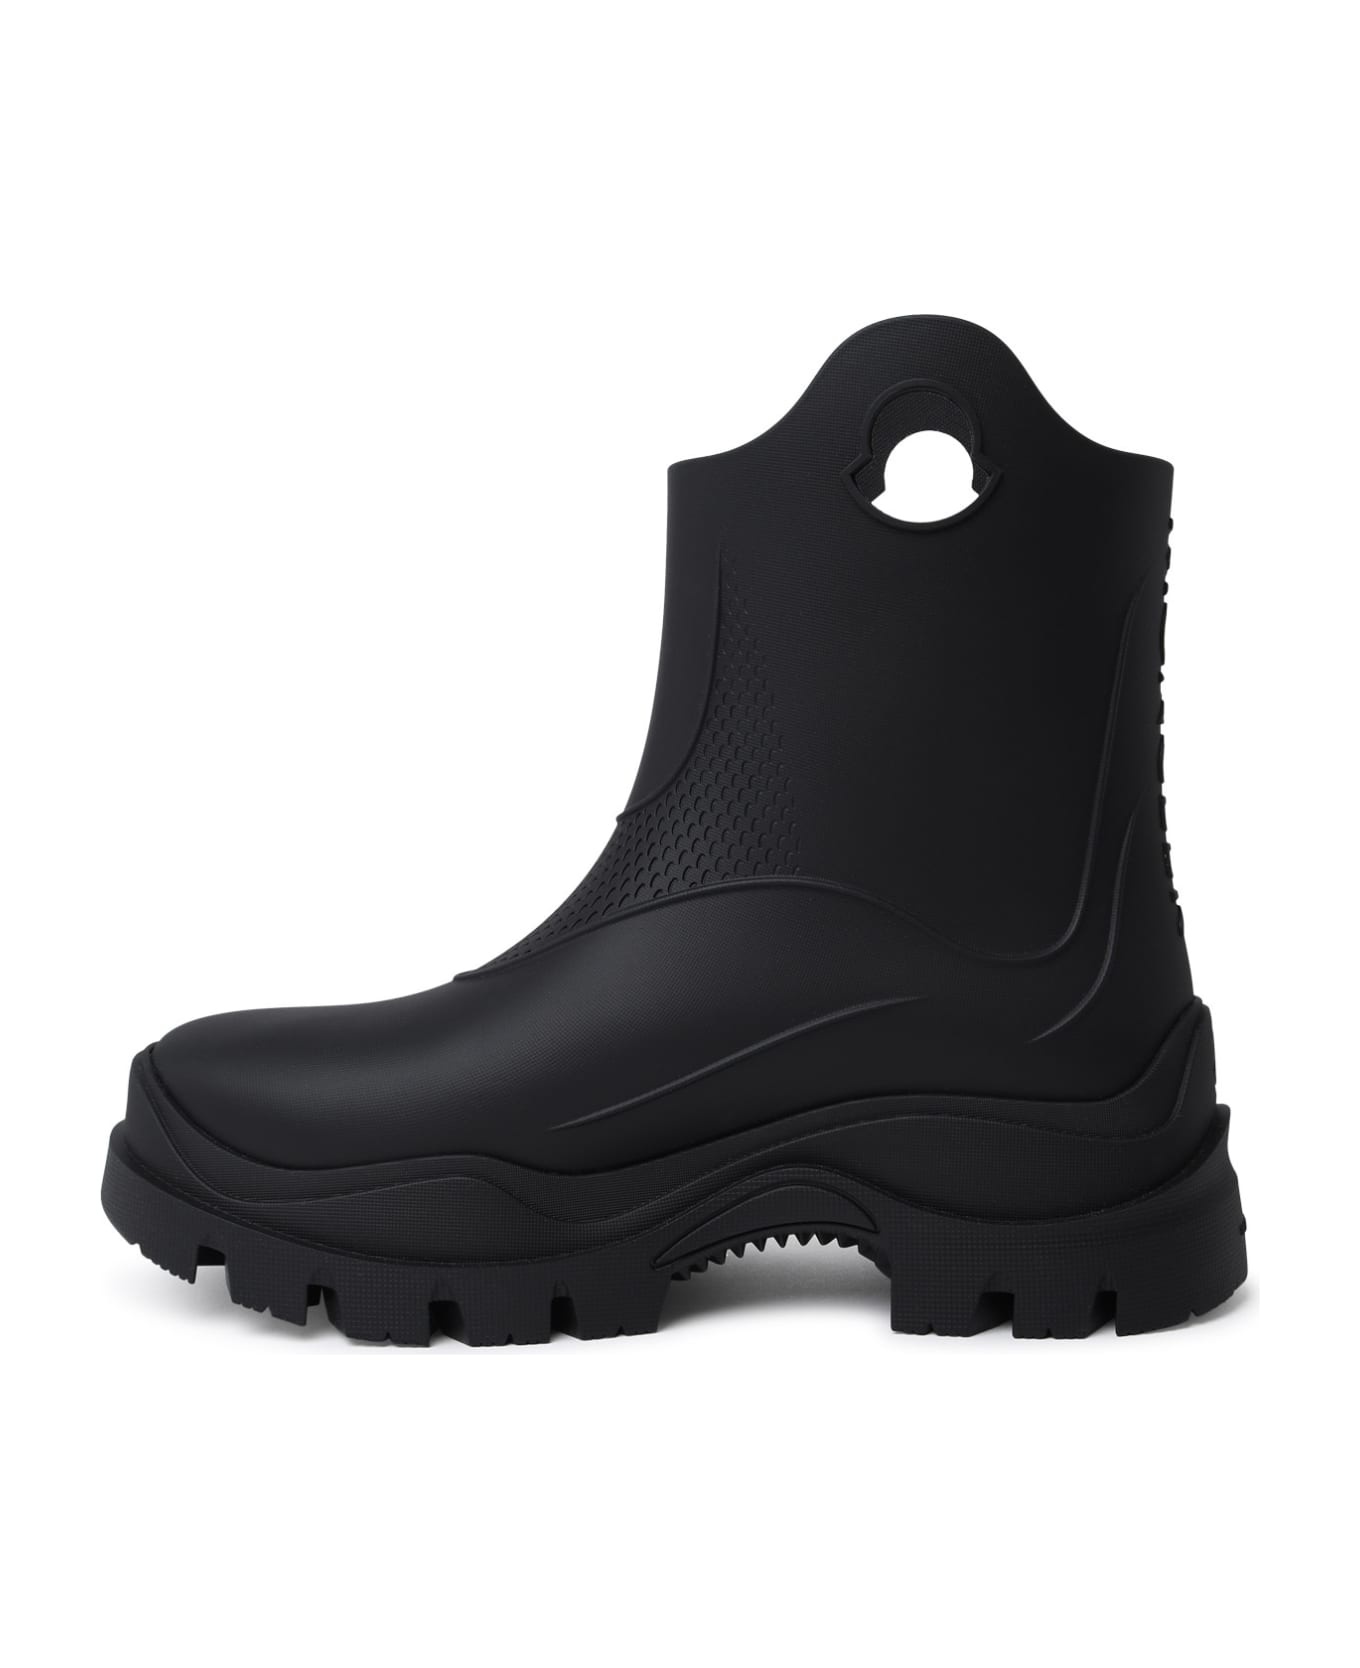 'misty' Black Pvc Rain Boots - 3